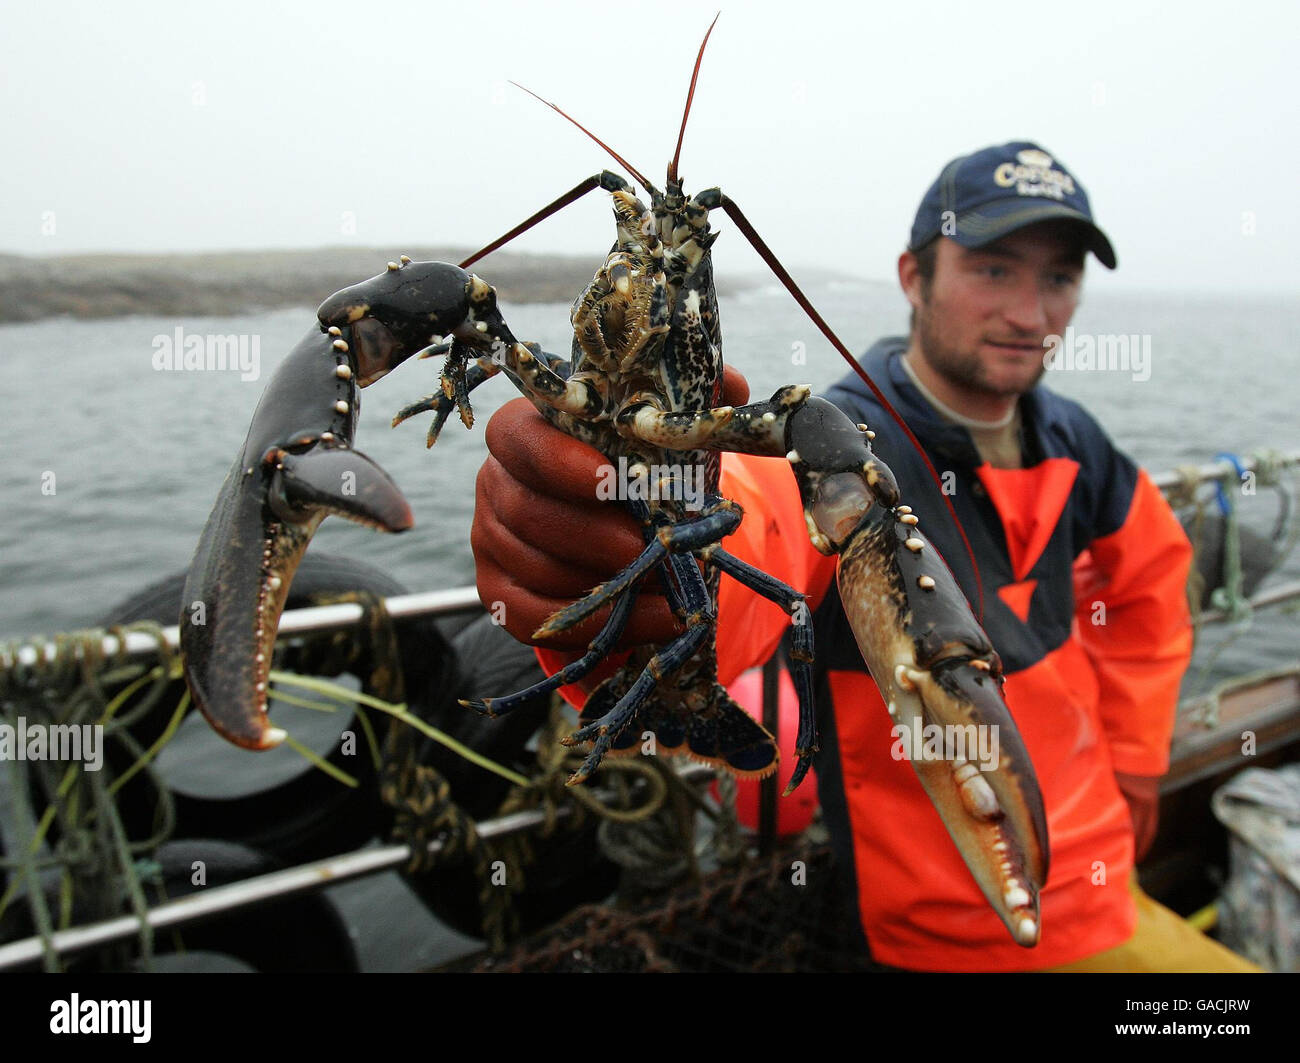 La pêche du homard dans l'Océan Atlantique Banque D'Images